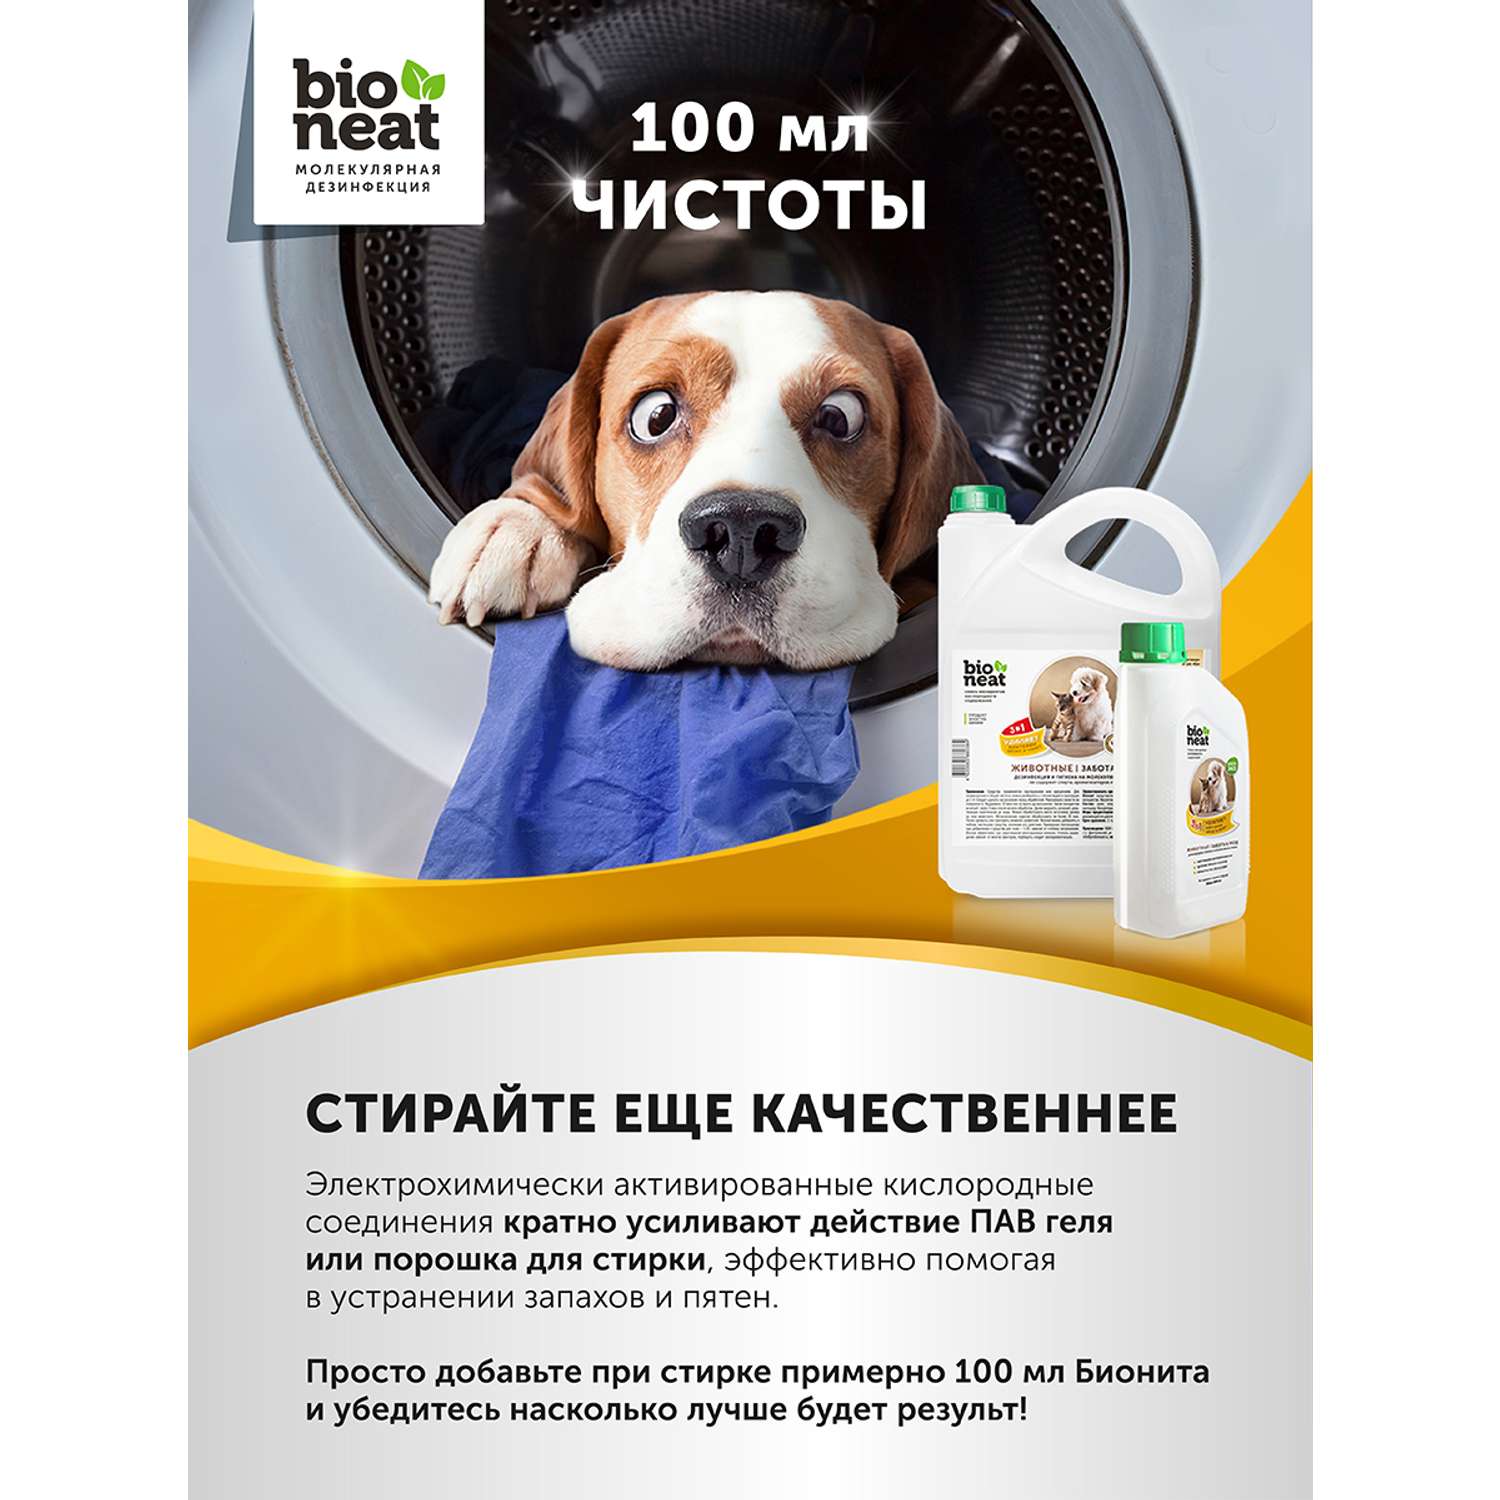 Дезинфицирующее средство Bioneat для обработки и устранения запахов Собаки 500 мл - фото 6